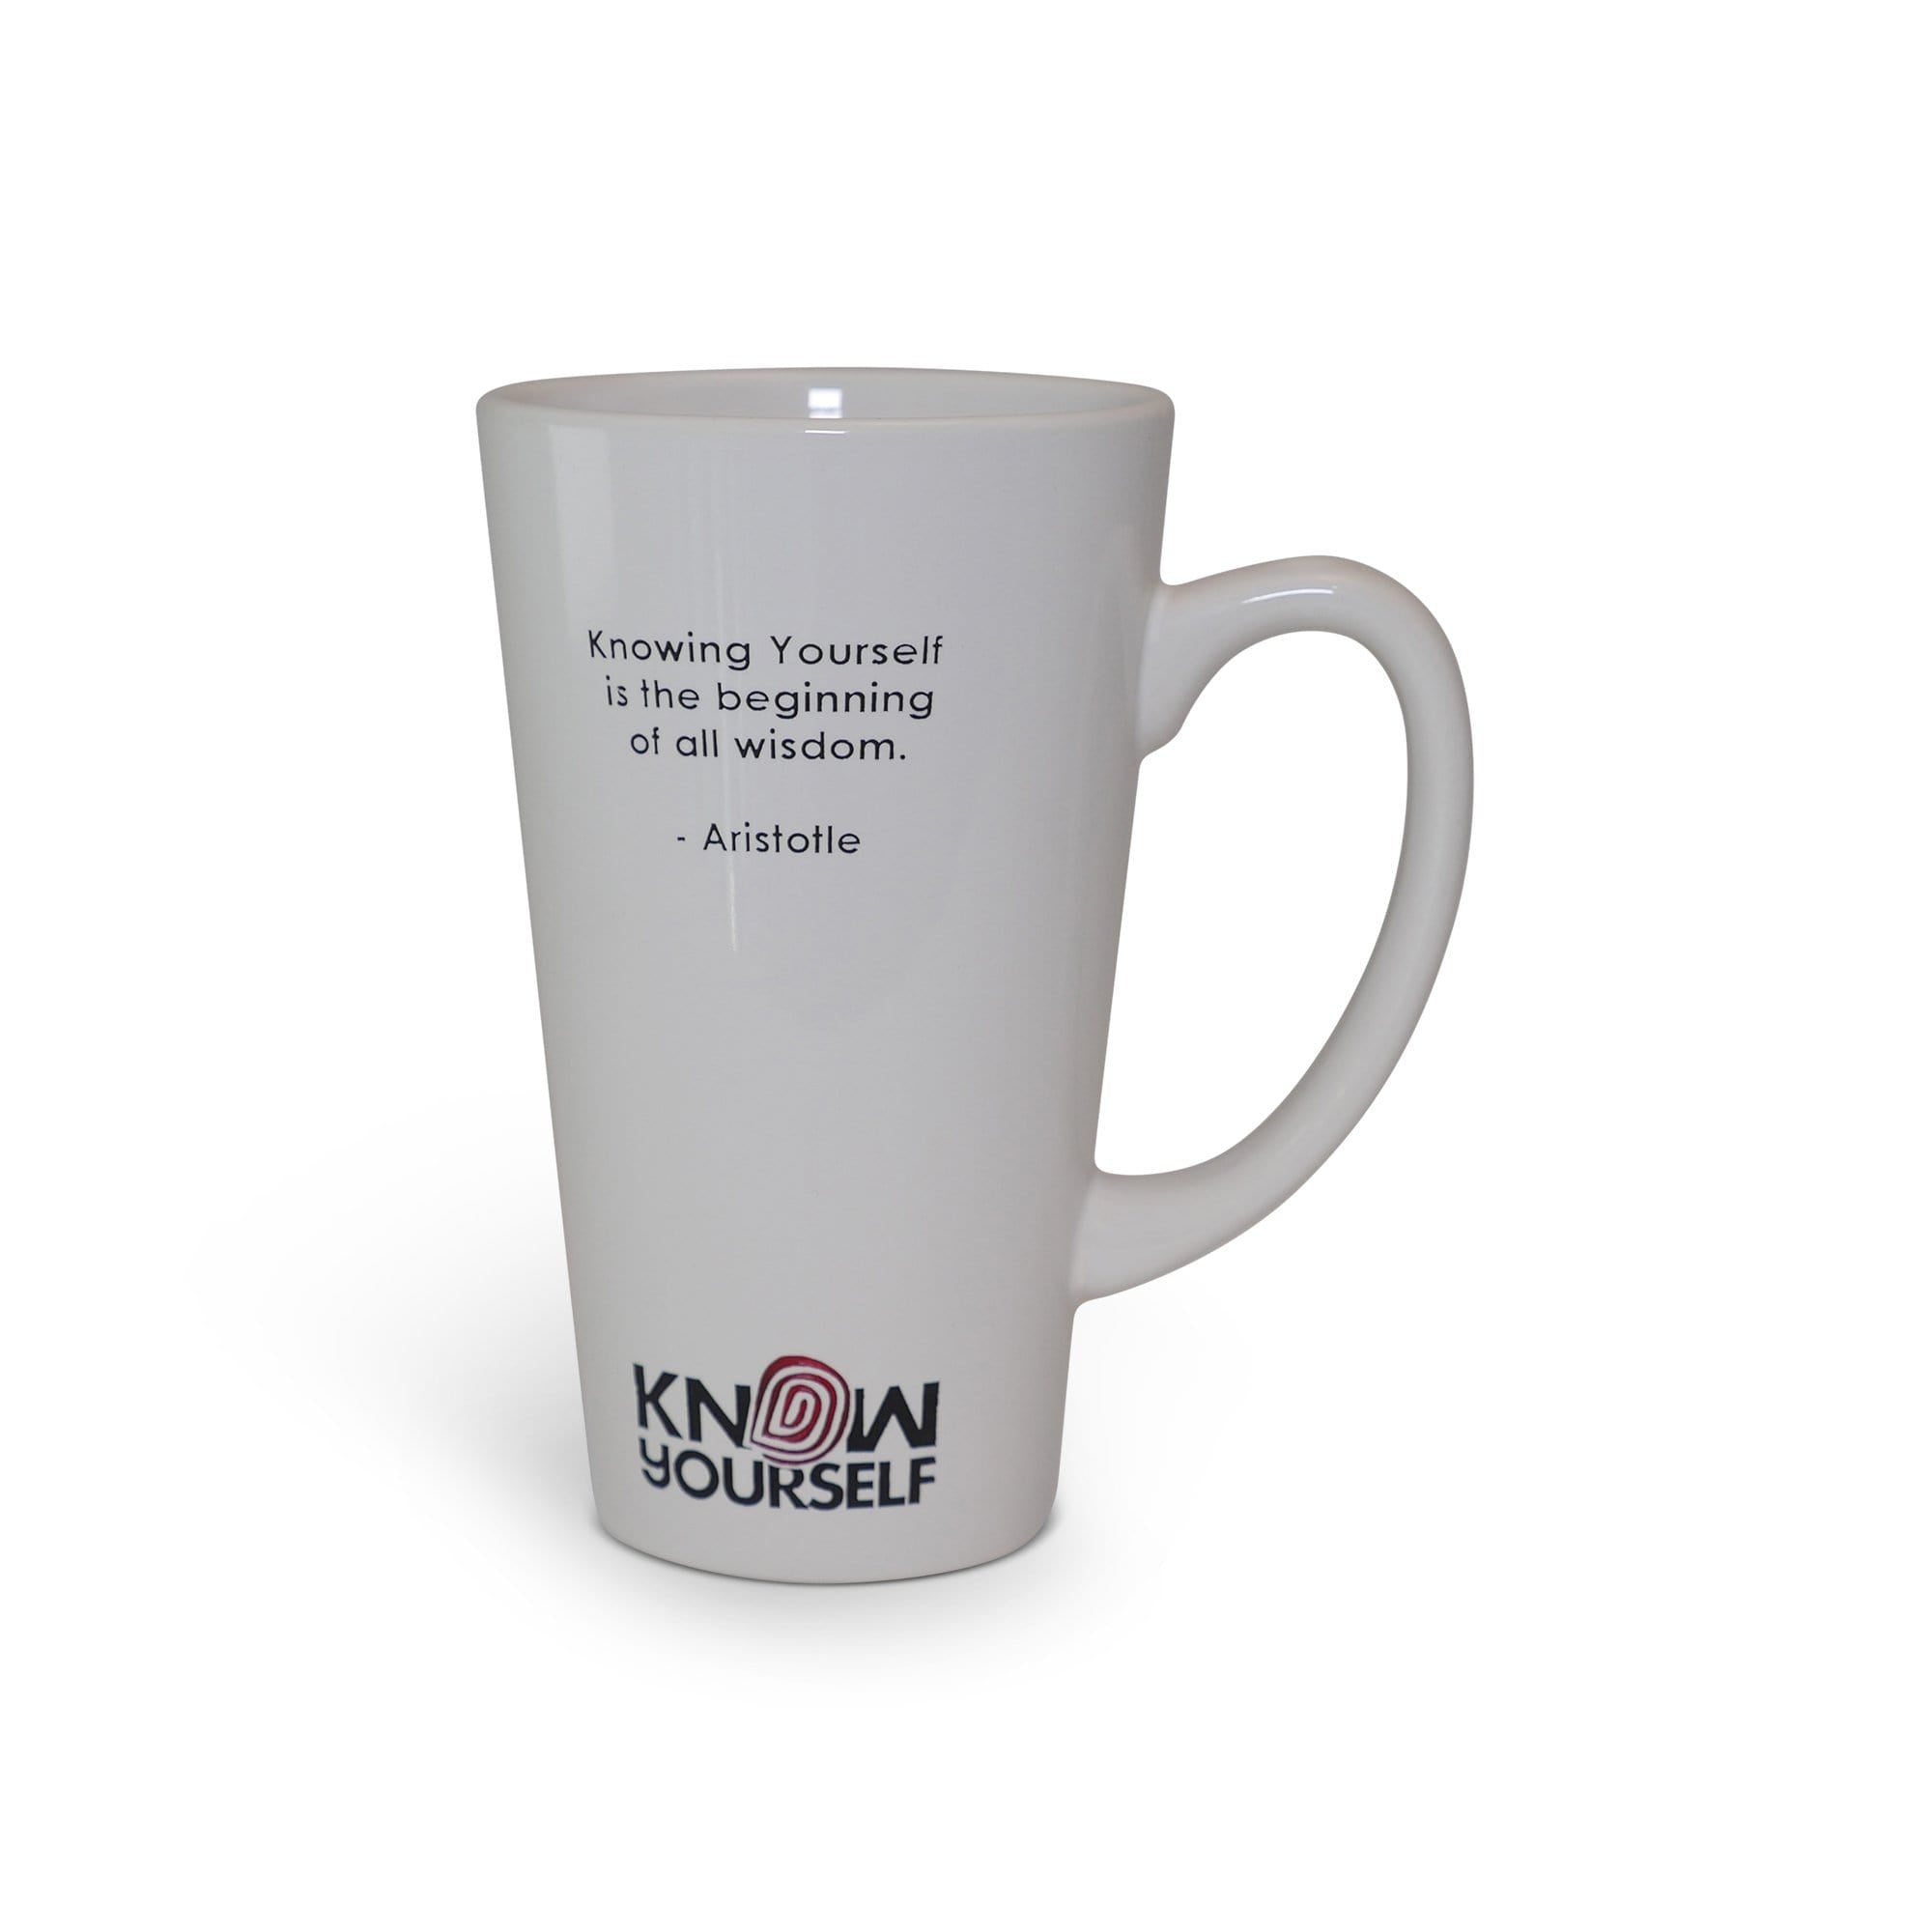 Limited Edition Porcelain Mugs